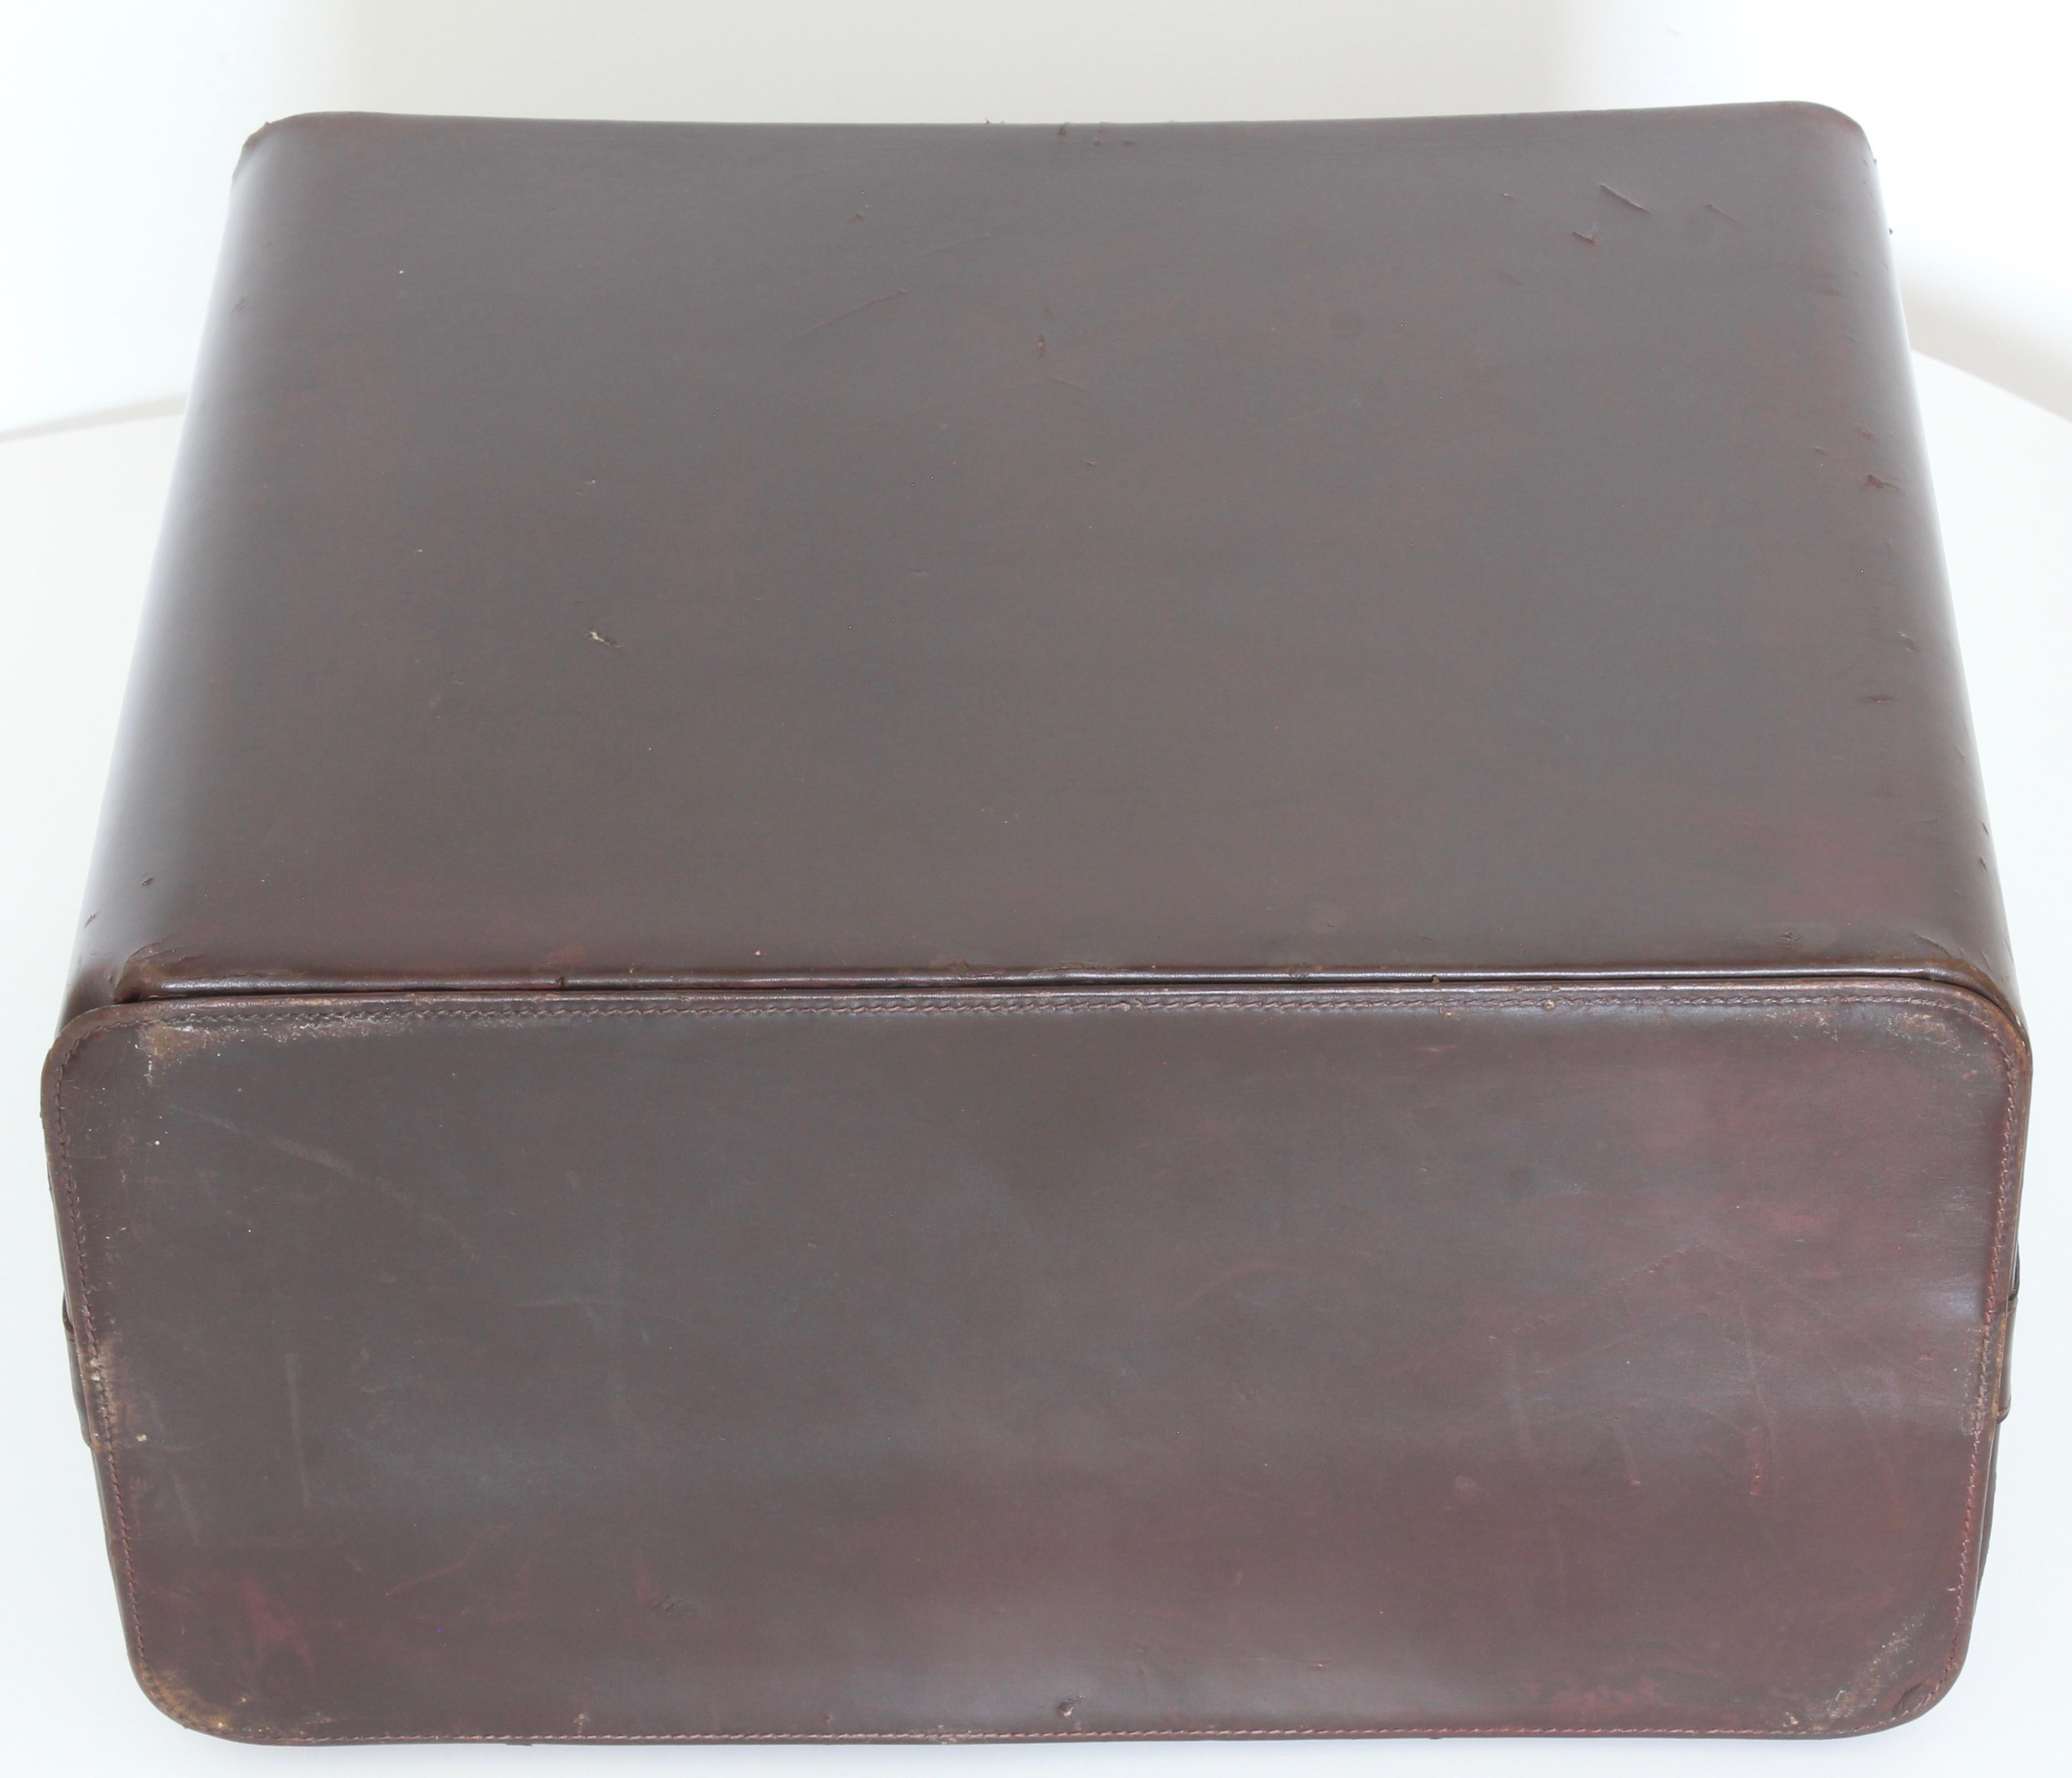 Gray Hermes Leather Train Case Travel Bag Vanity Case Vintage 50s Rare